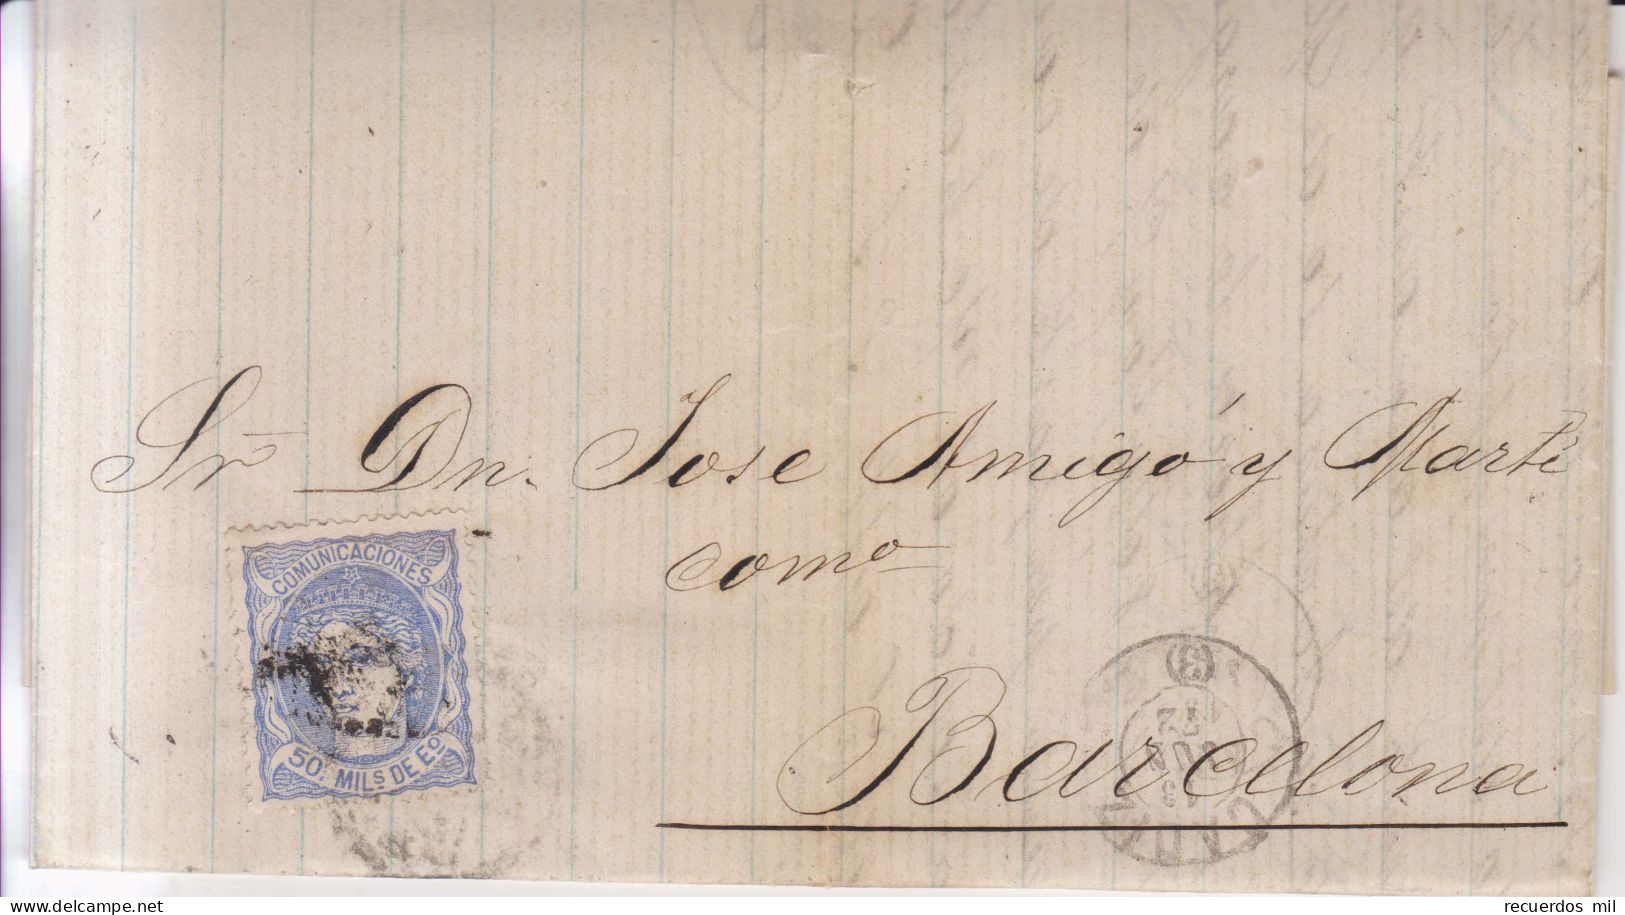 Año 1870 Edifil 107 Alegoria Carta Matasellos Rombo Cadiz N. Herrero Y Cuesta - Covers & Documents